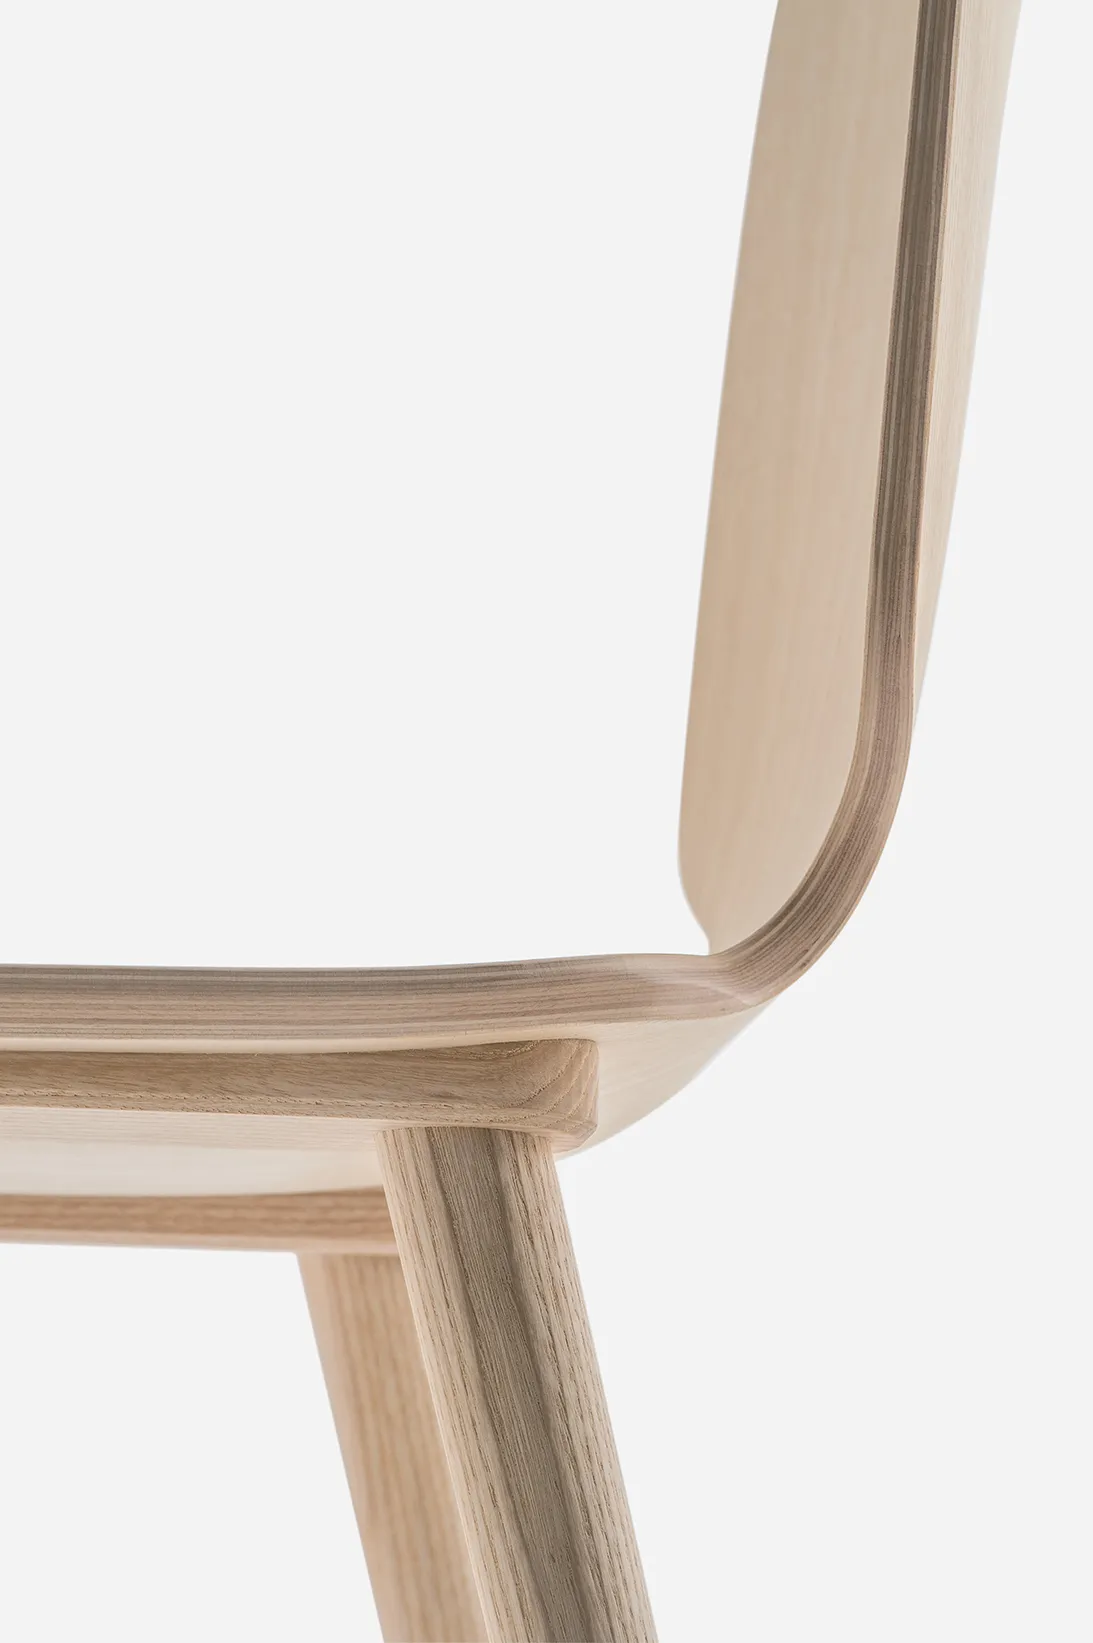 Stuhl BABILA 2700 - Holzstuhl von Pedrali RB - rubinrot lackiert